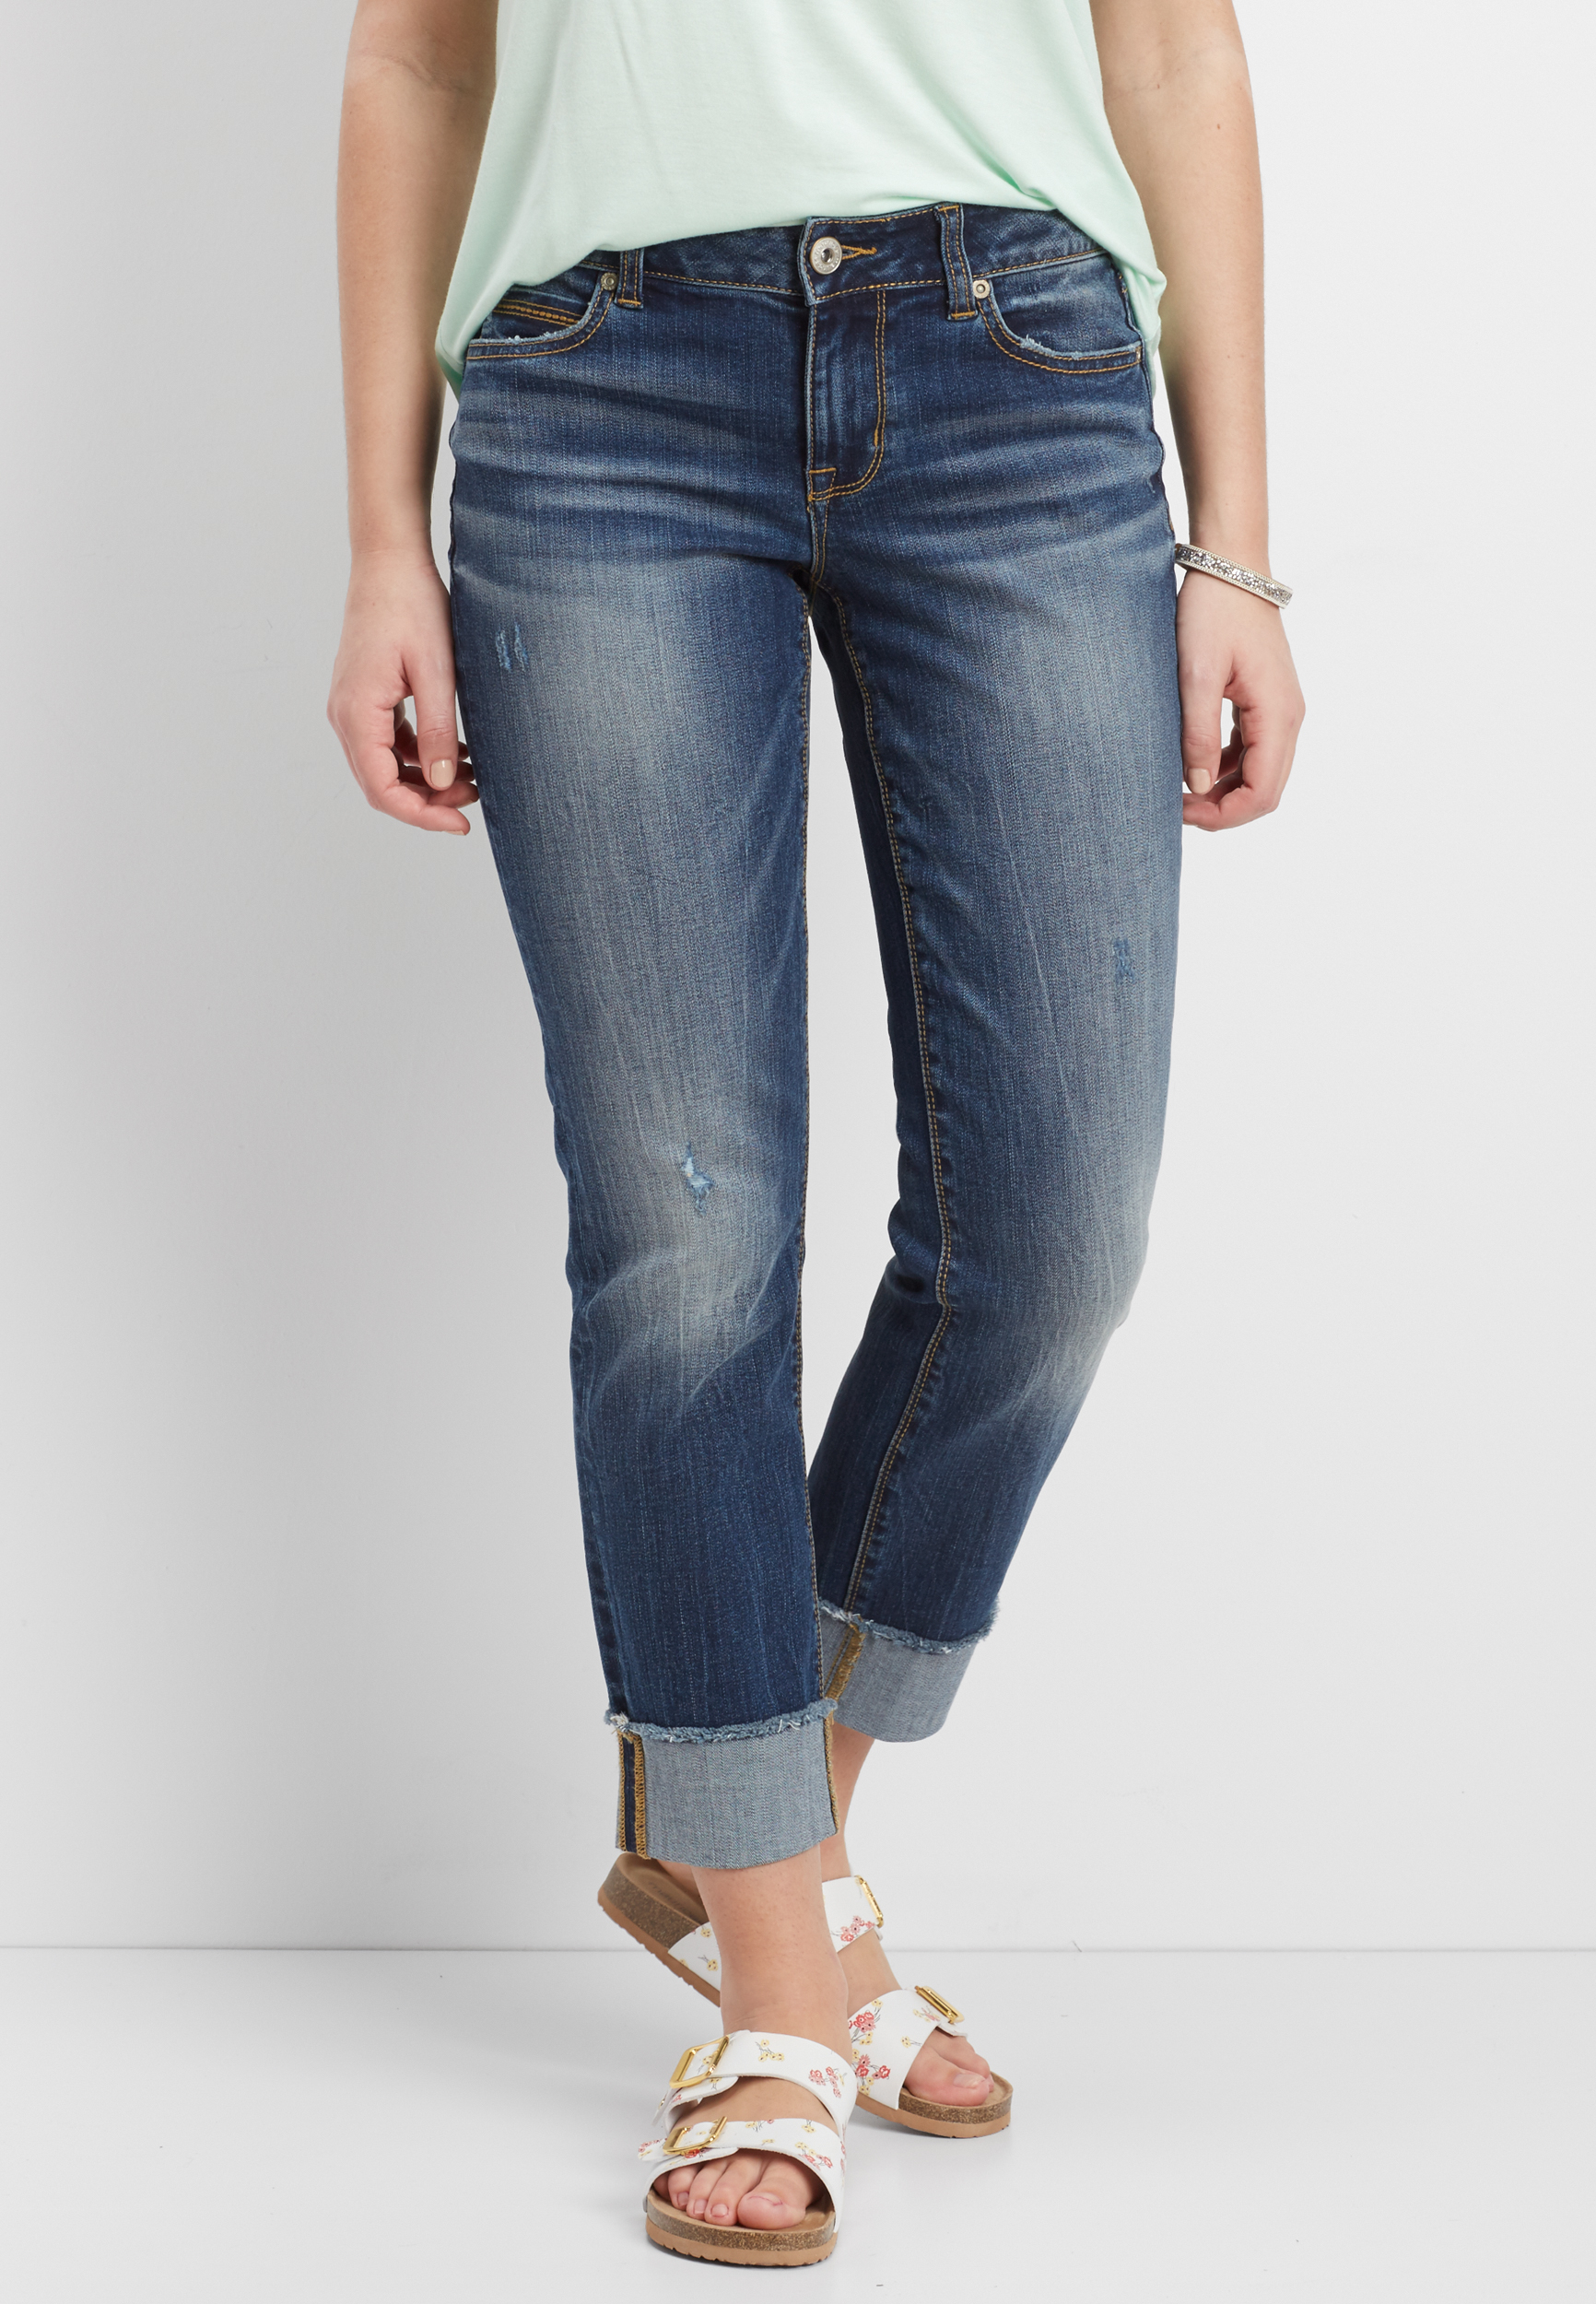 levis formal jeans